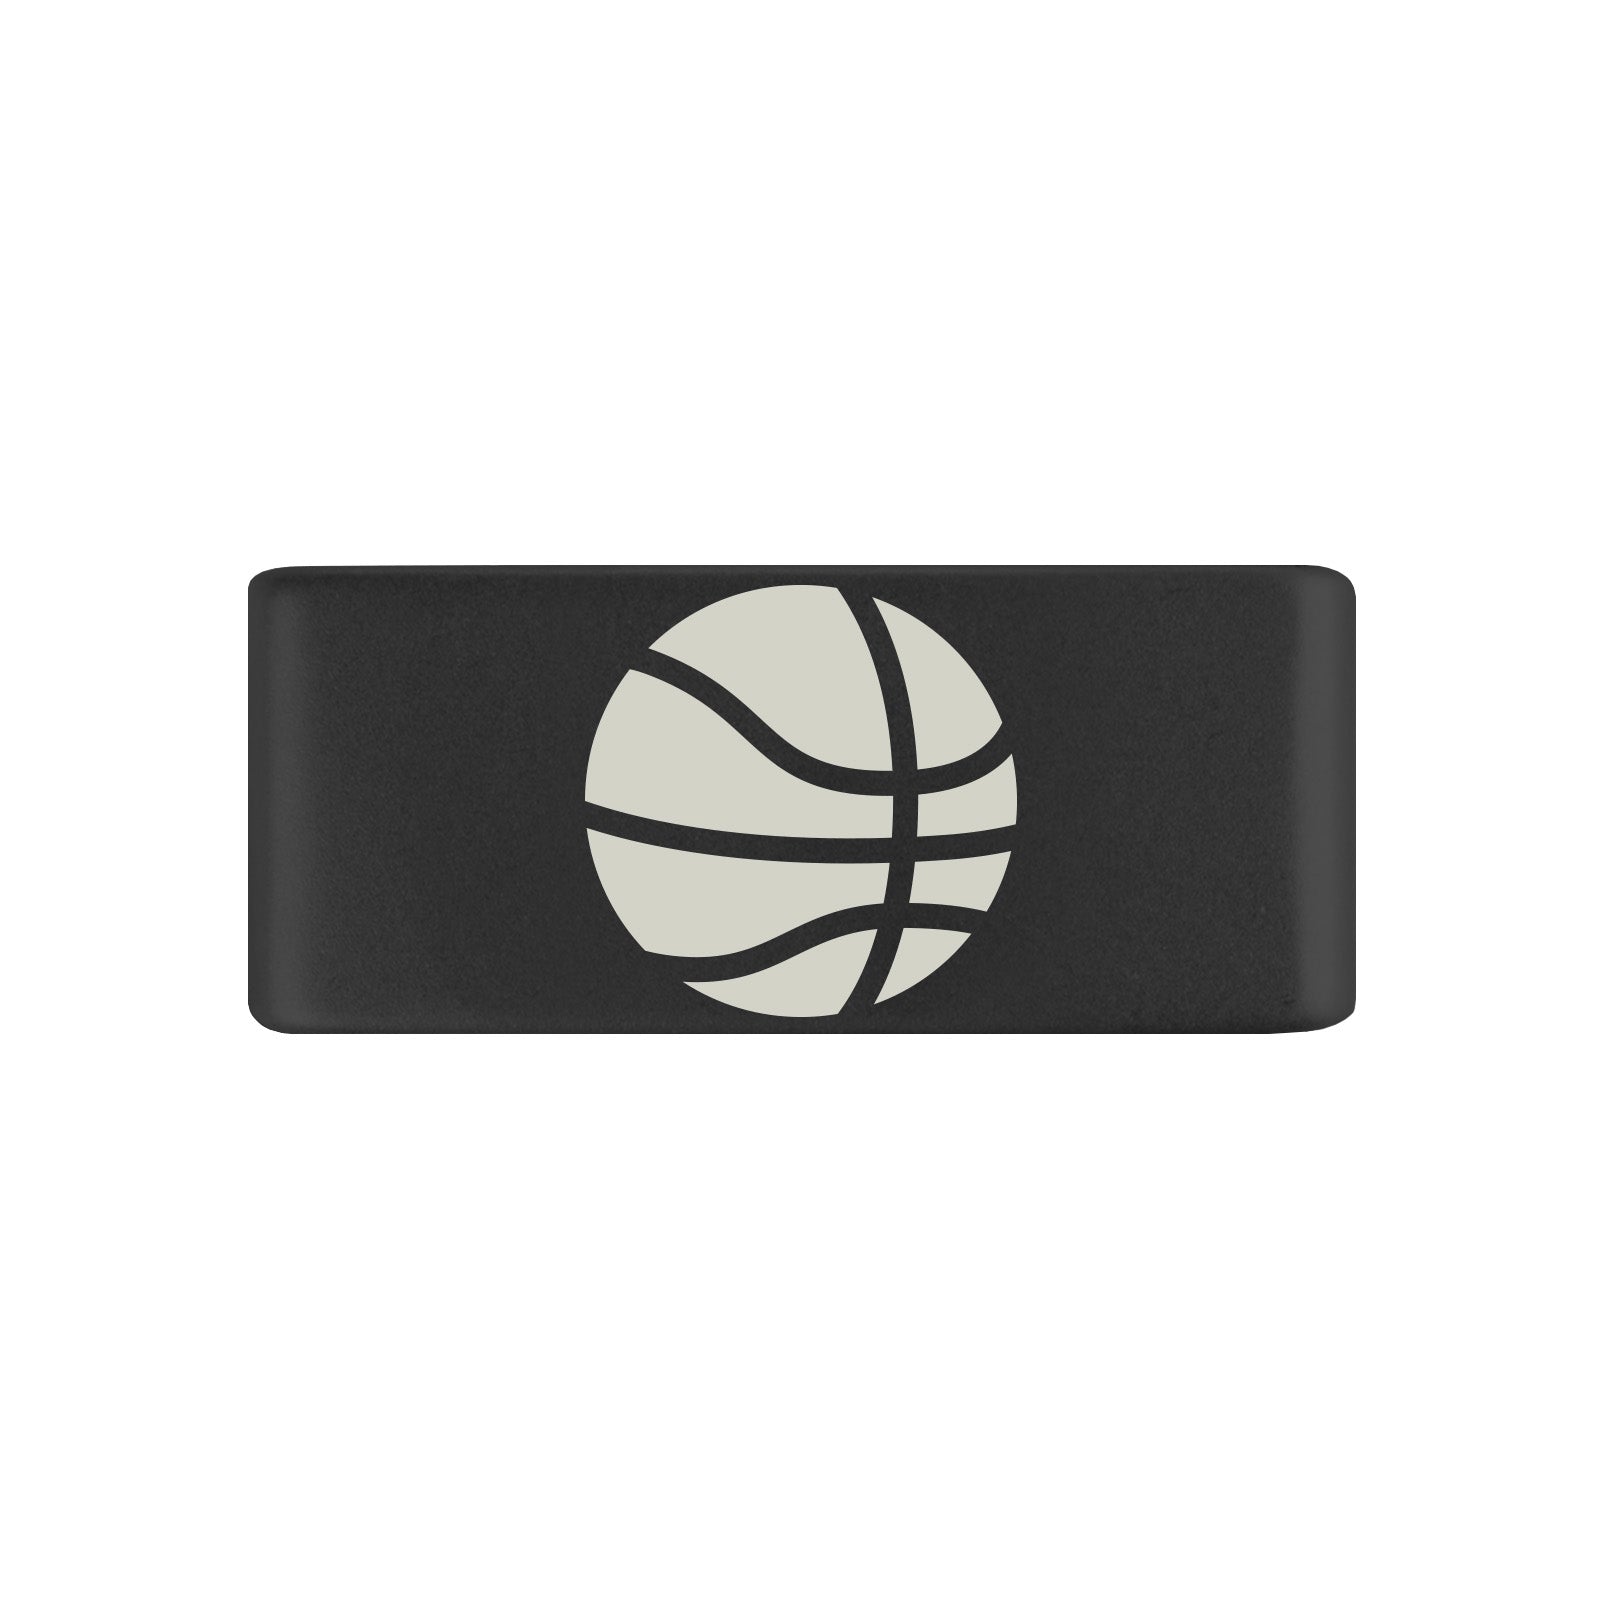 Basketball Badge Badge 13mm - ROAD iD